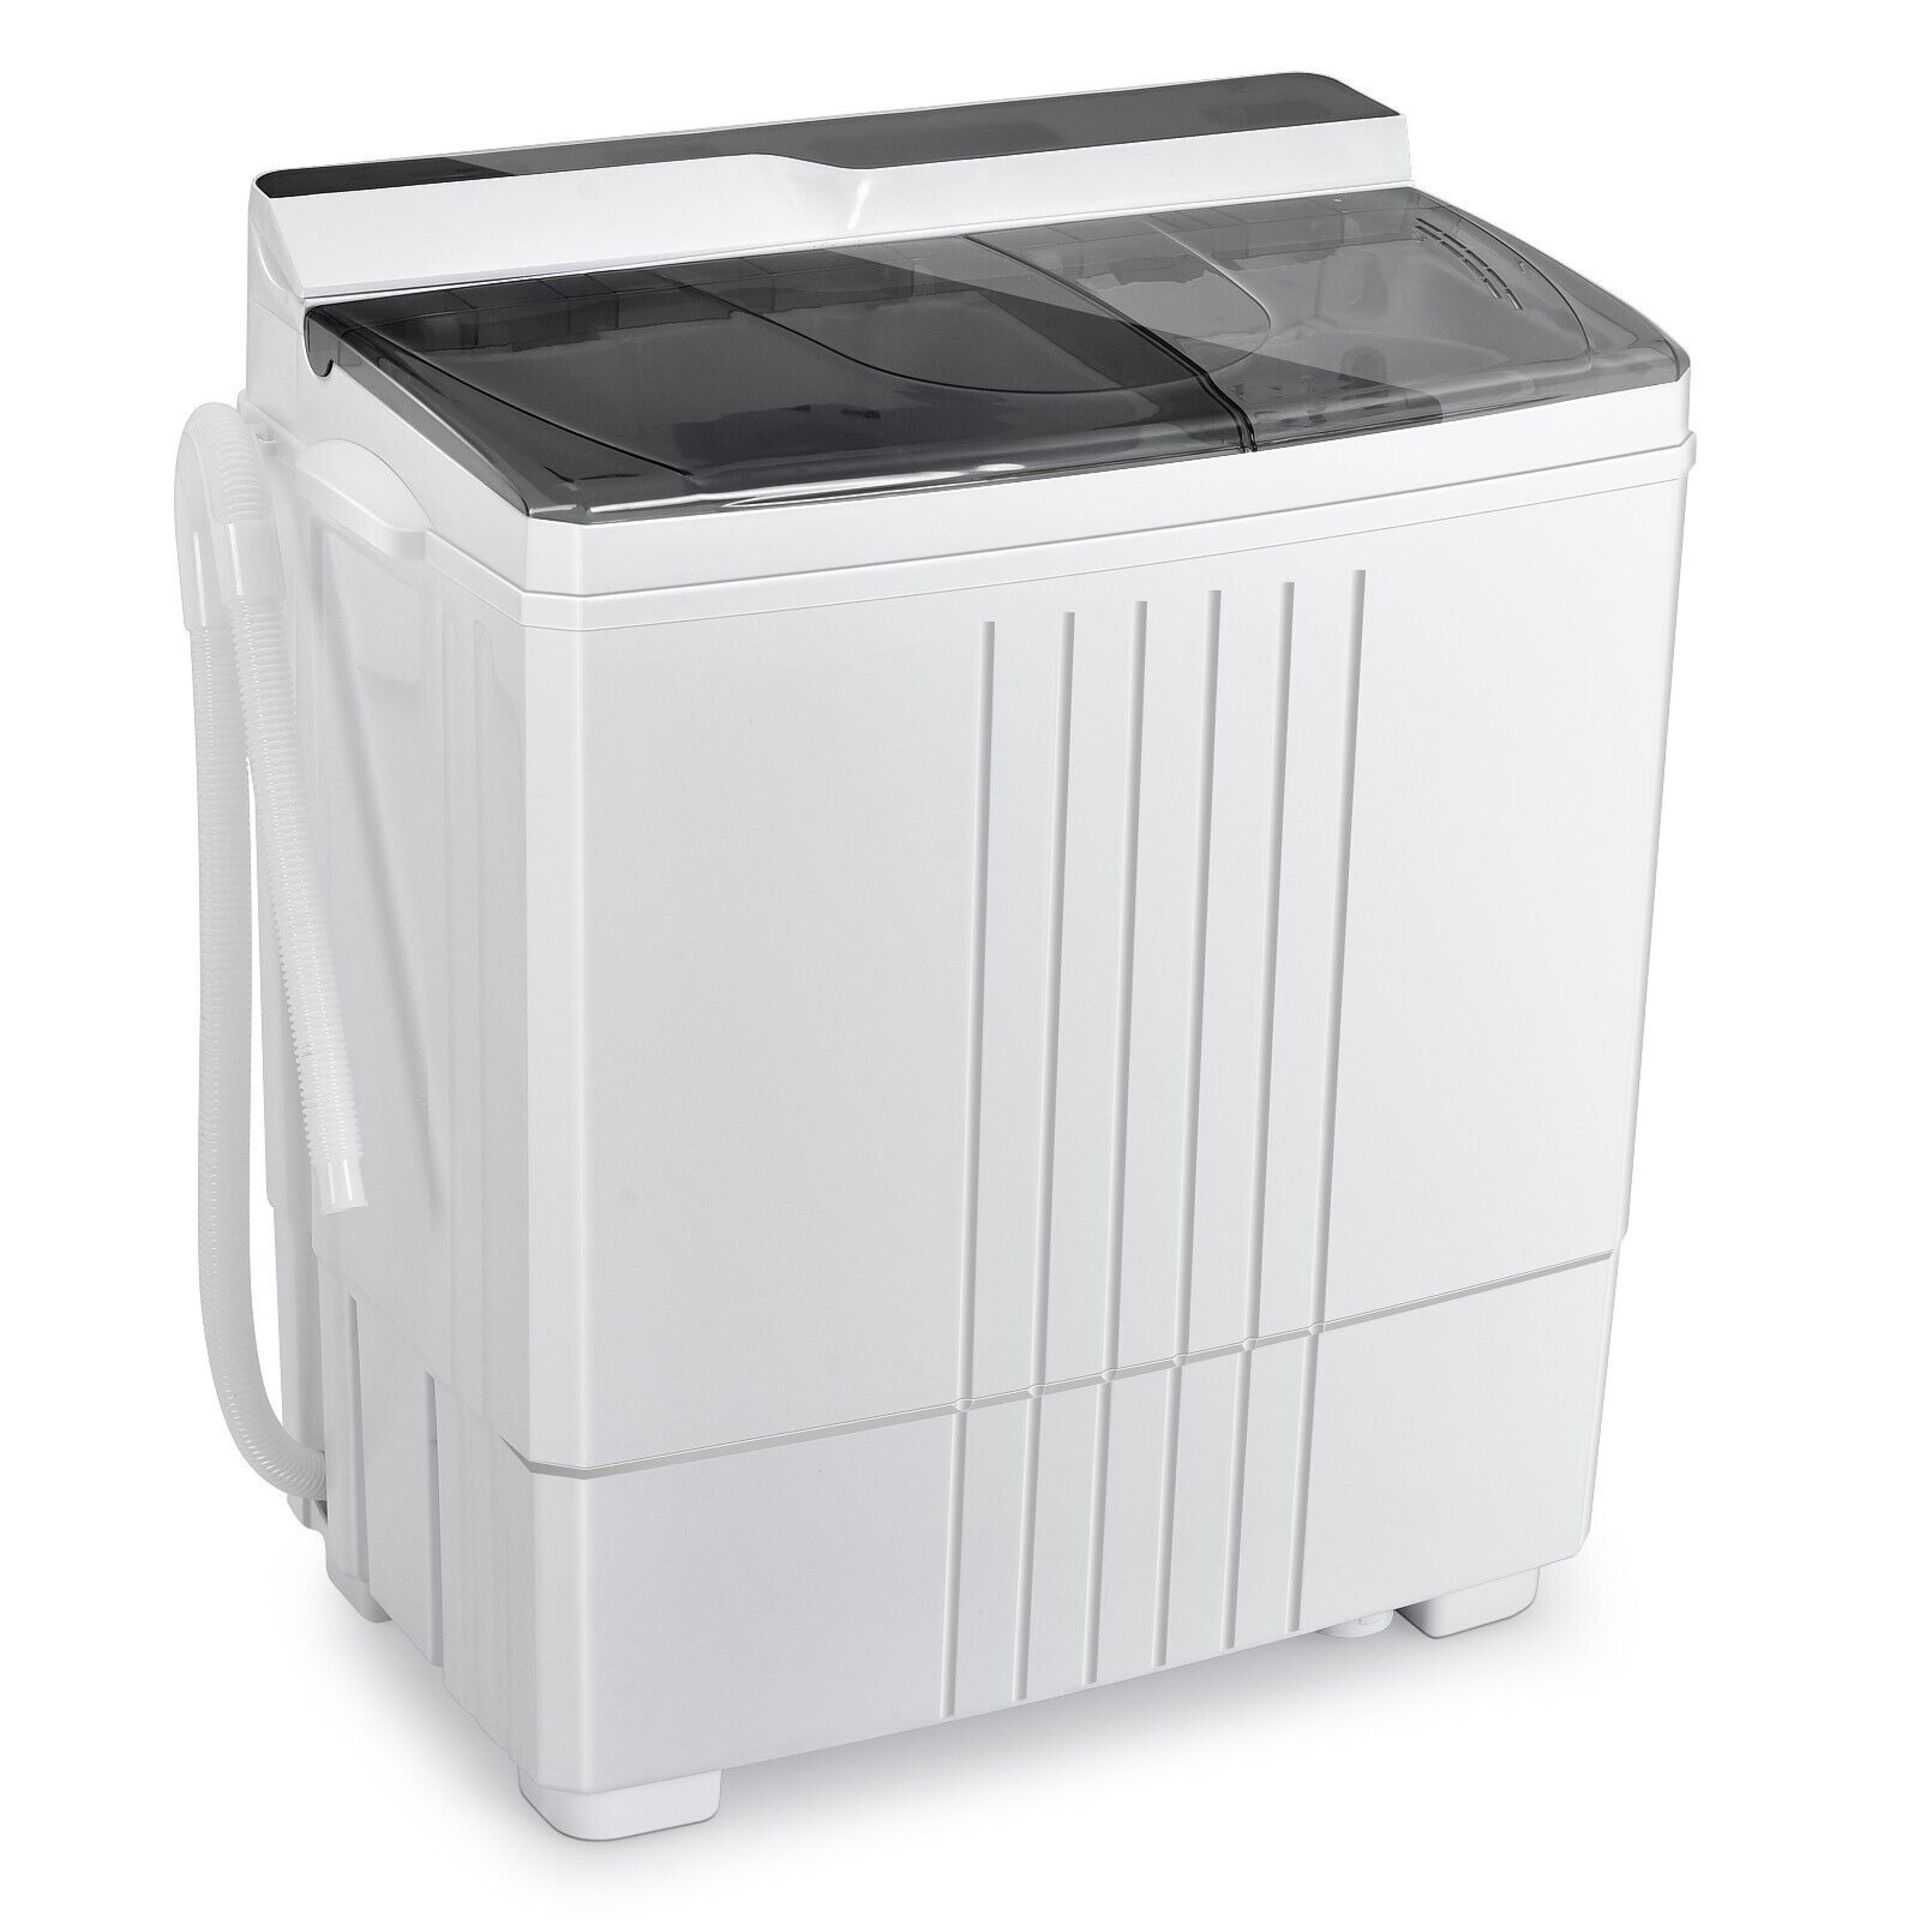 Twin Tub Portable Washing Machine with 1.5KG Capacity Dryer-Grey - ER54